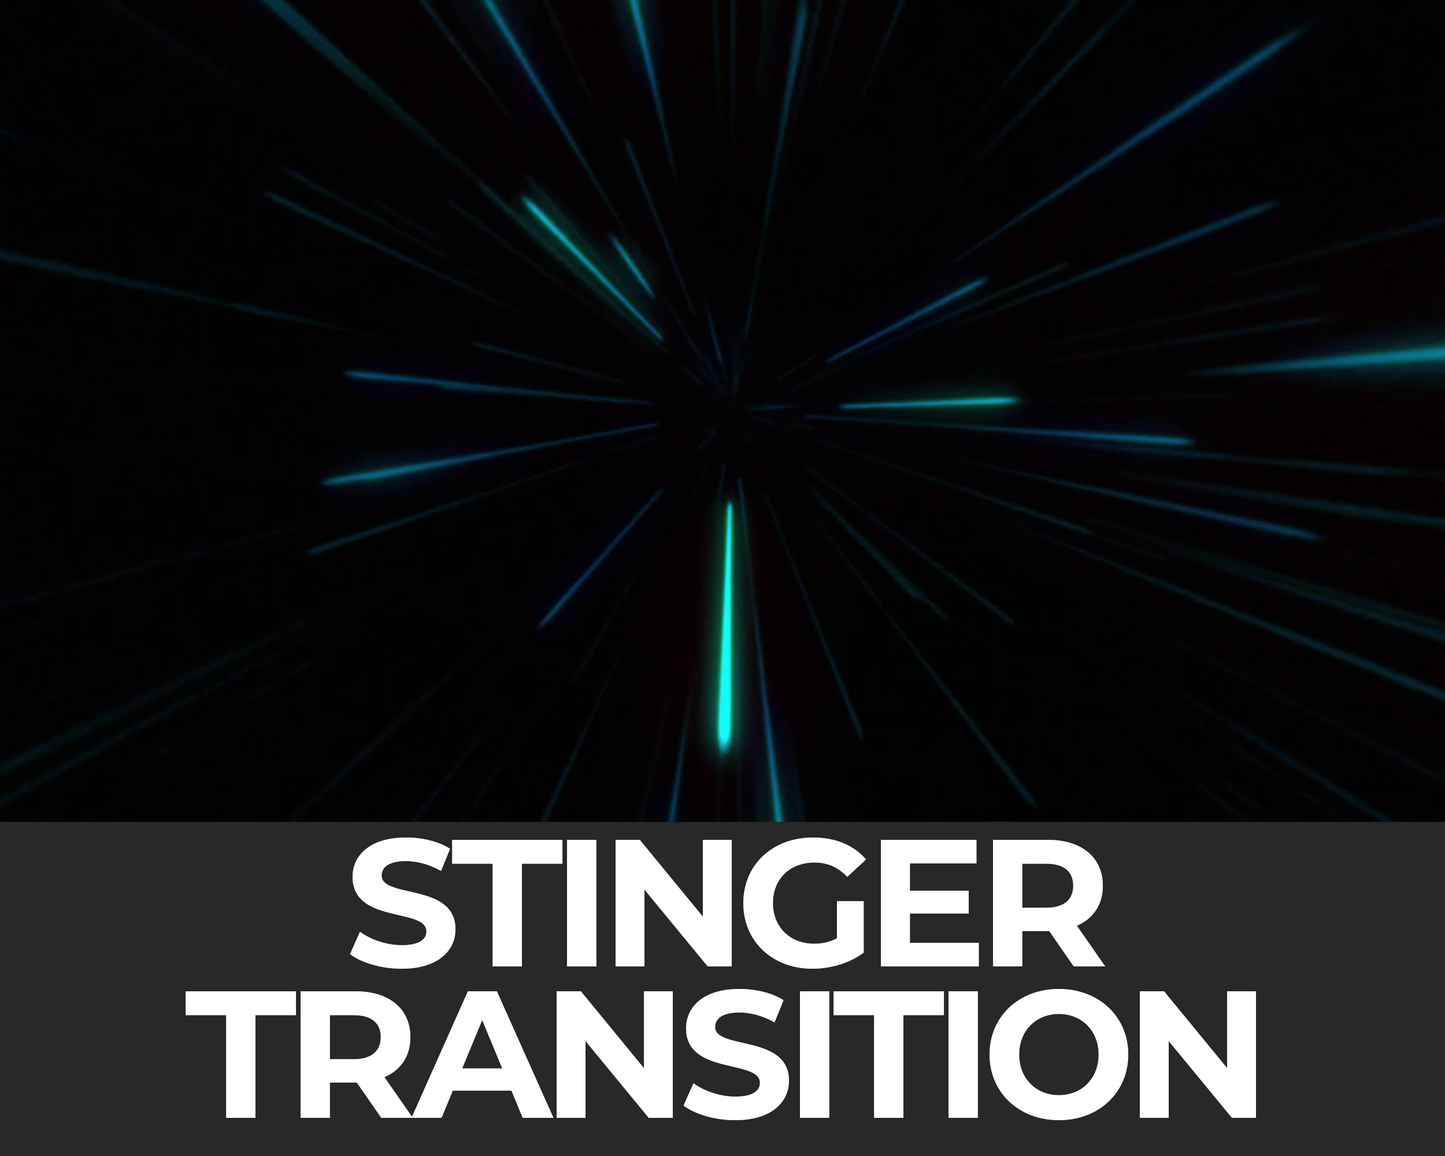 Space Travel Stinger Transition